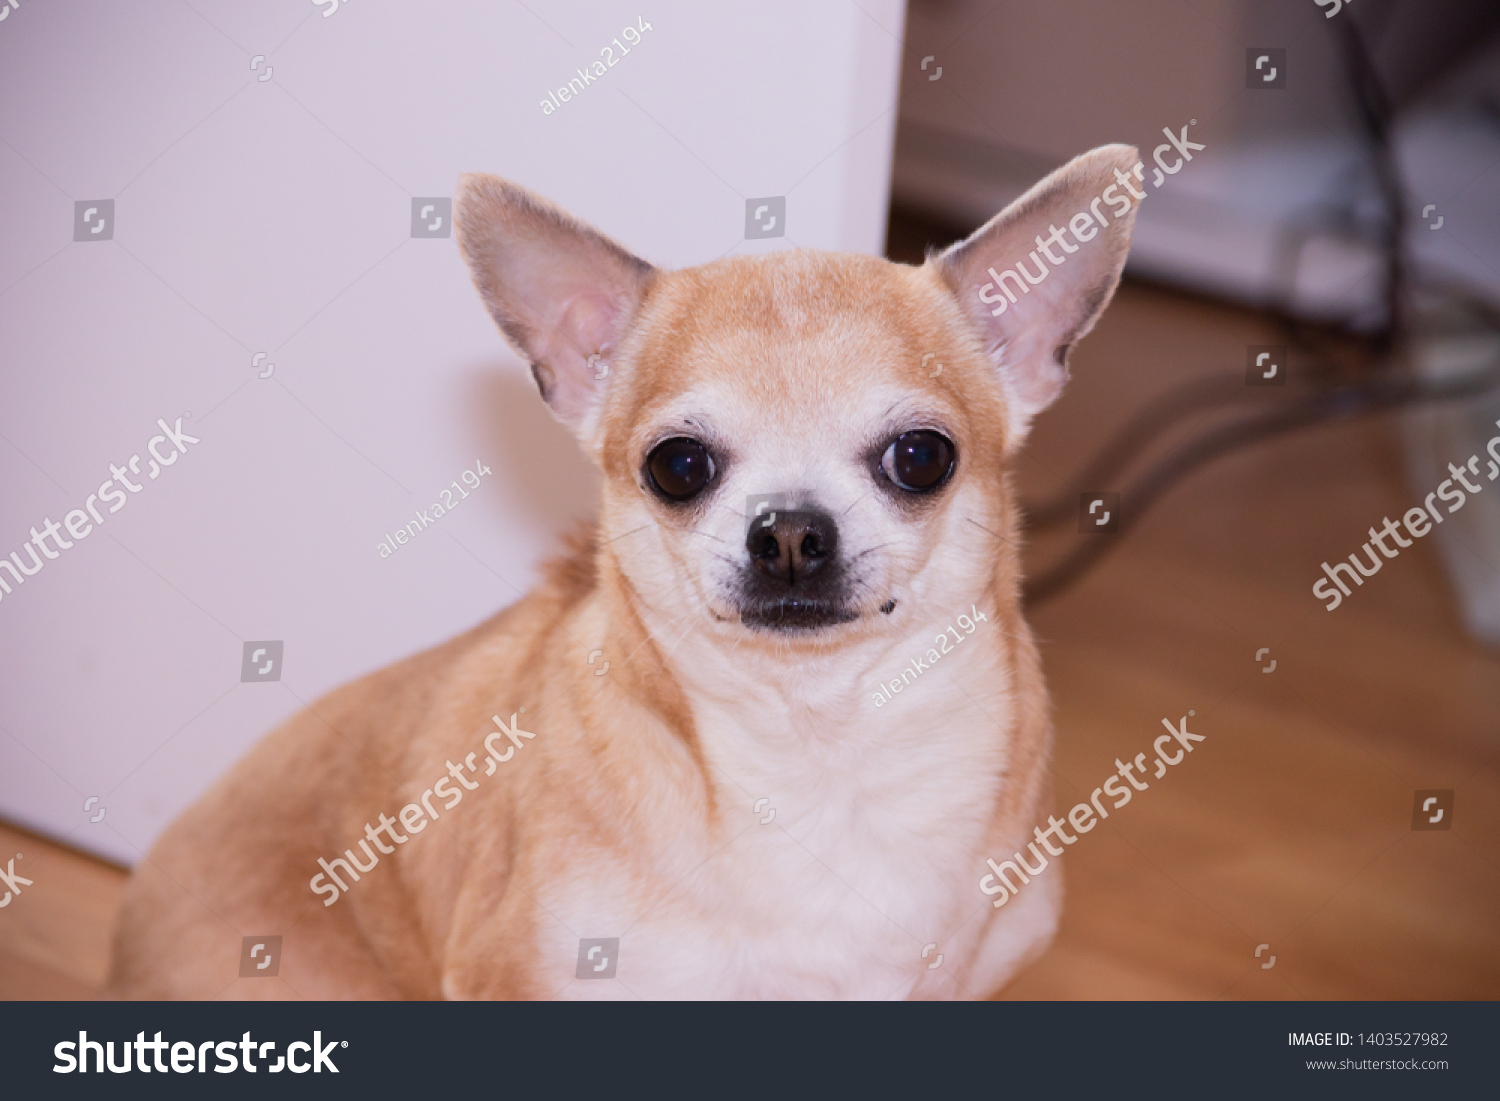 little dog chihuahua